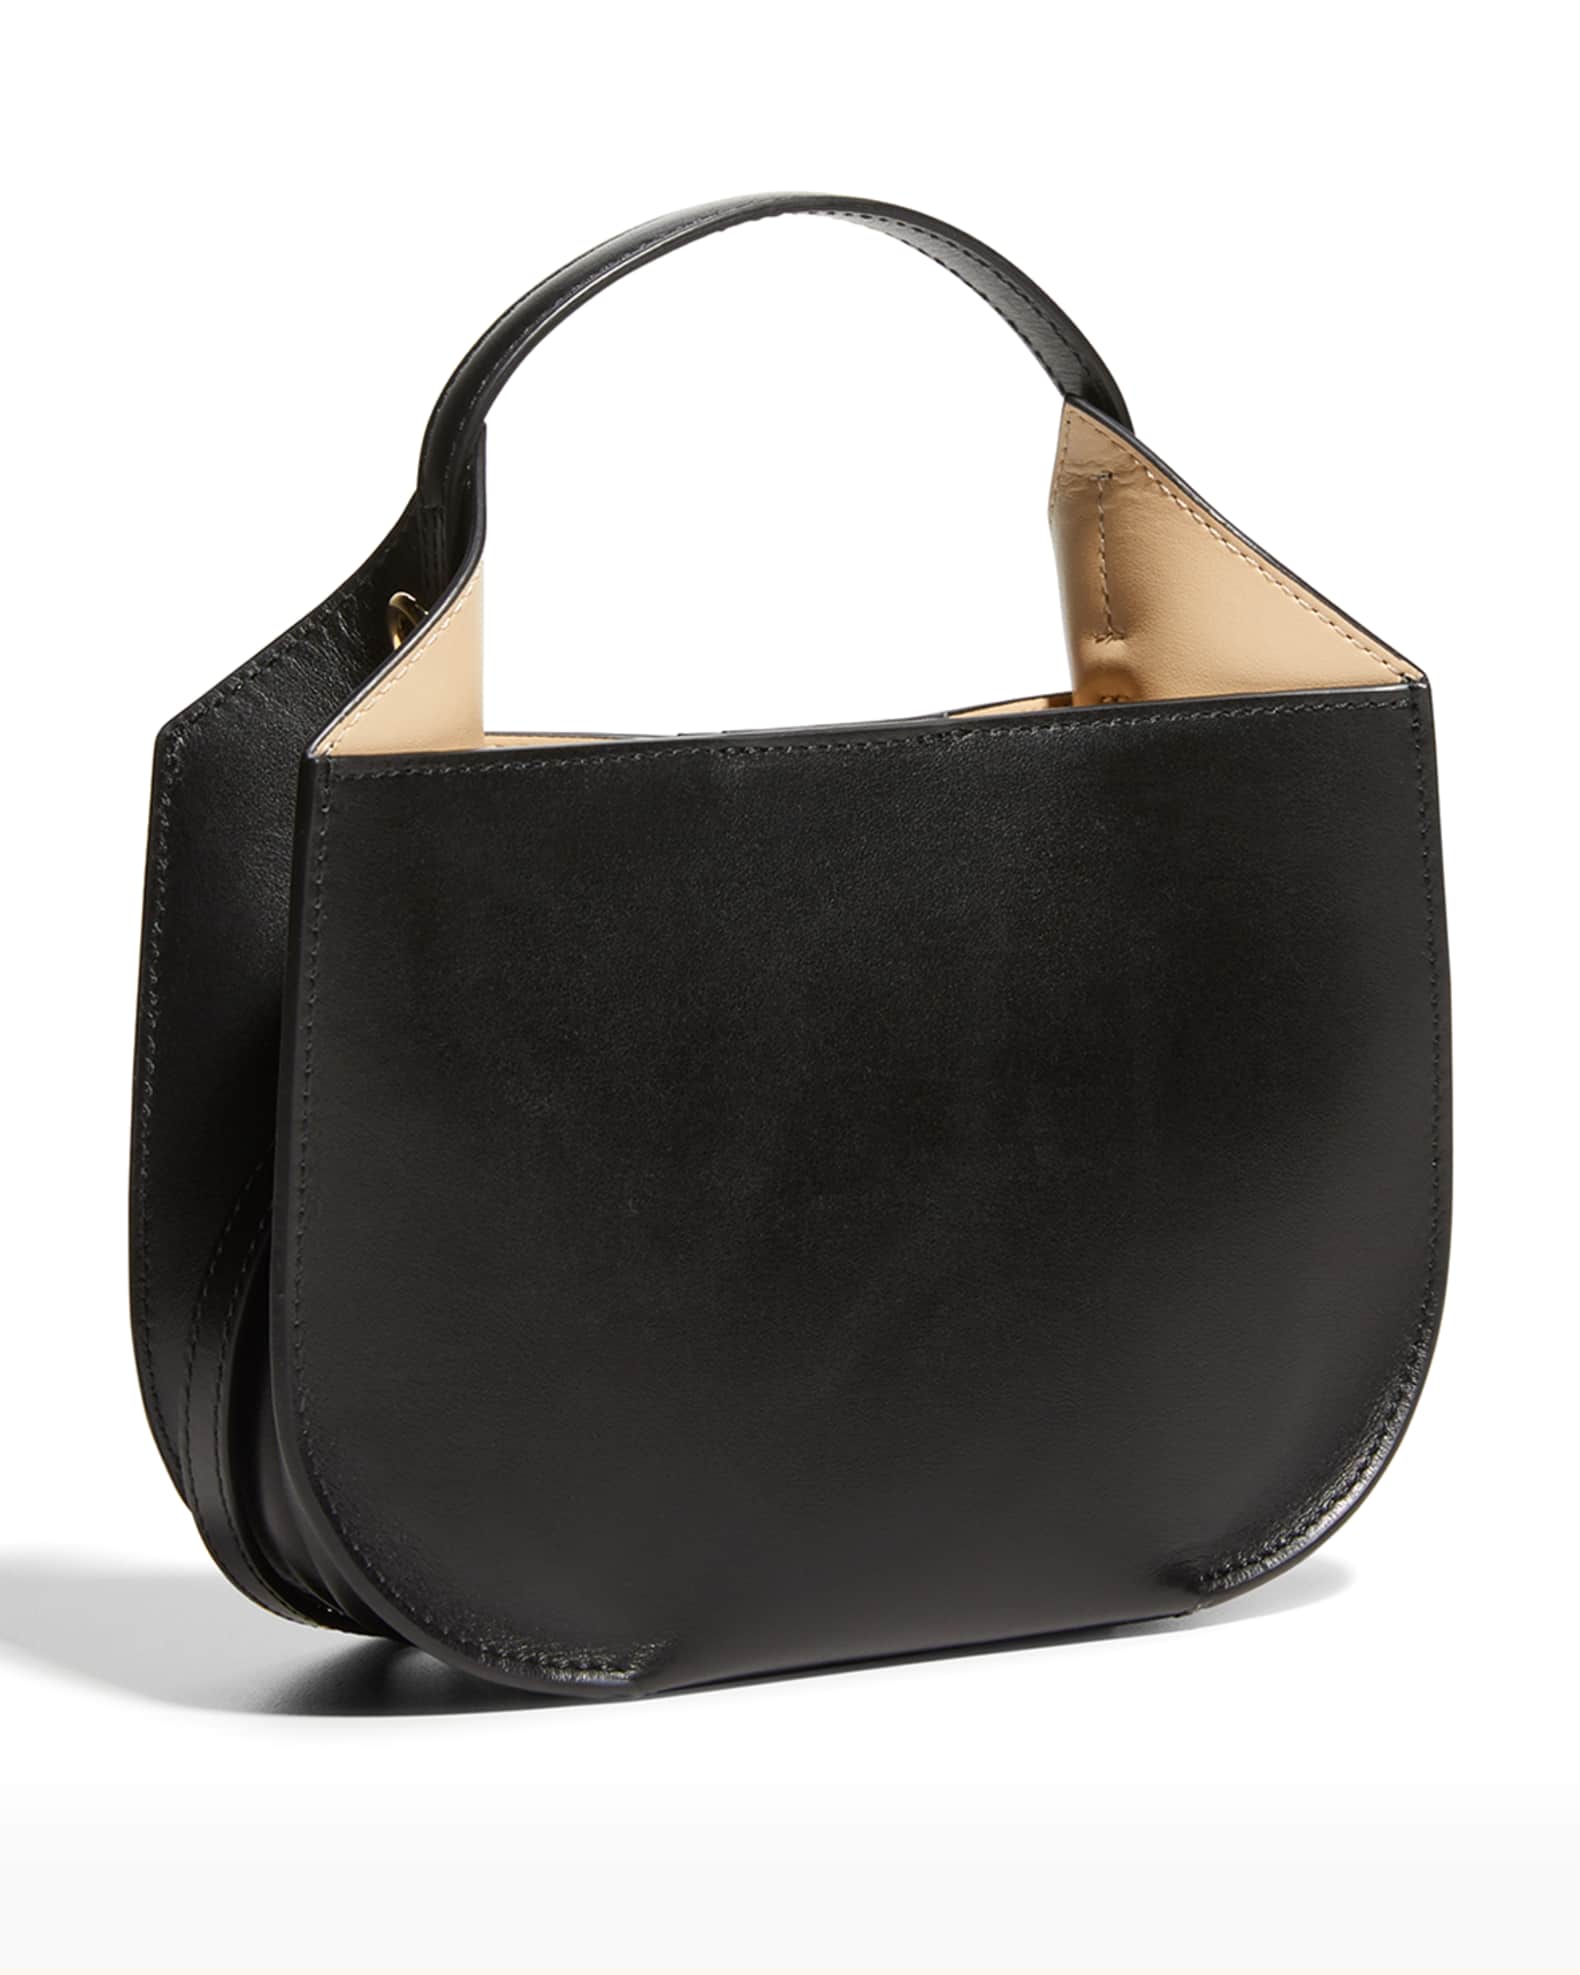 Ree Projects Helene East-West Leather Mini Hobo Bag | Neiman Marcus